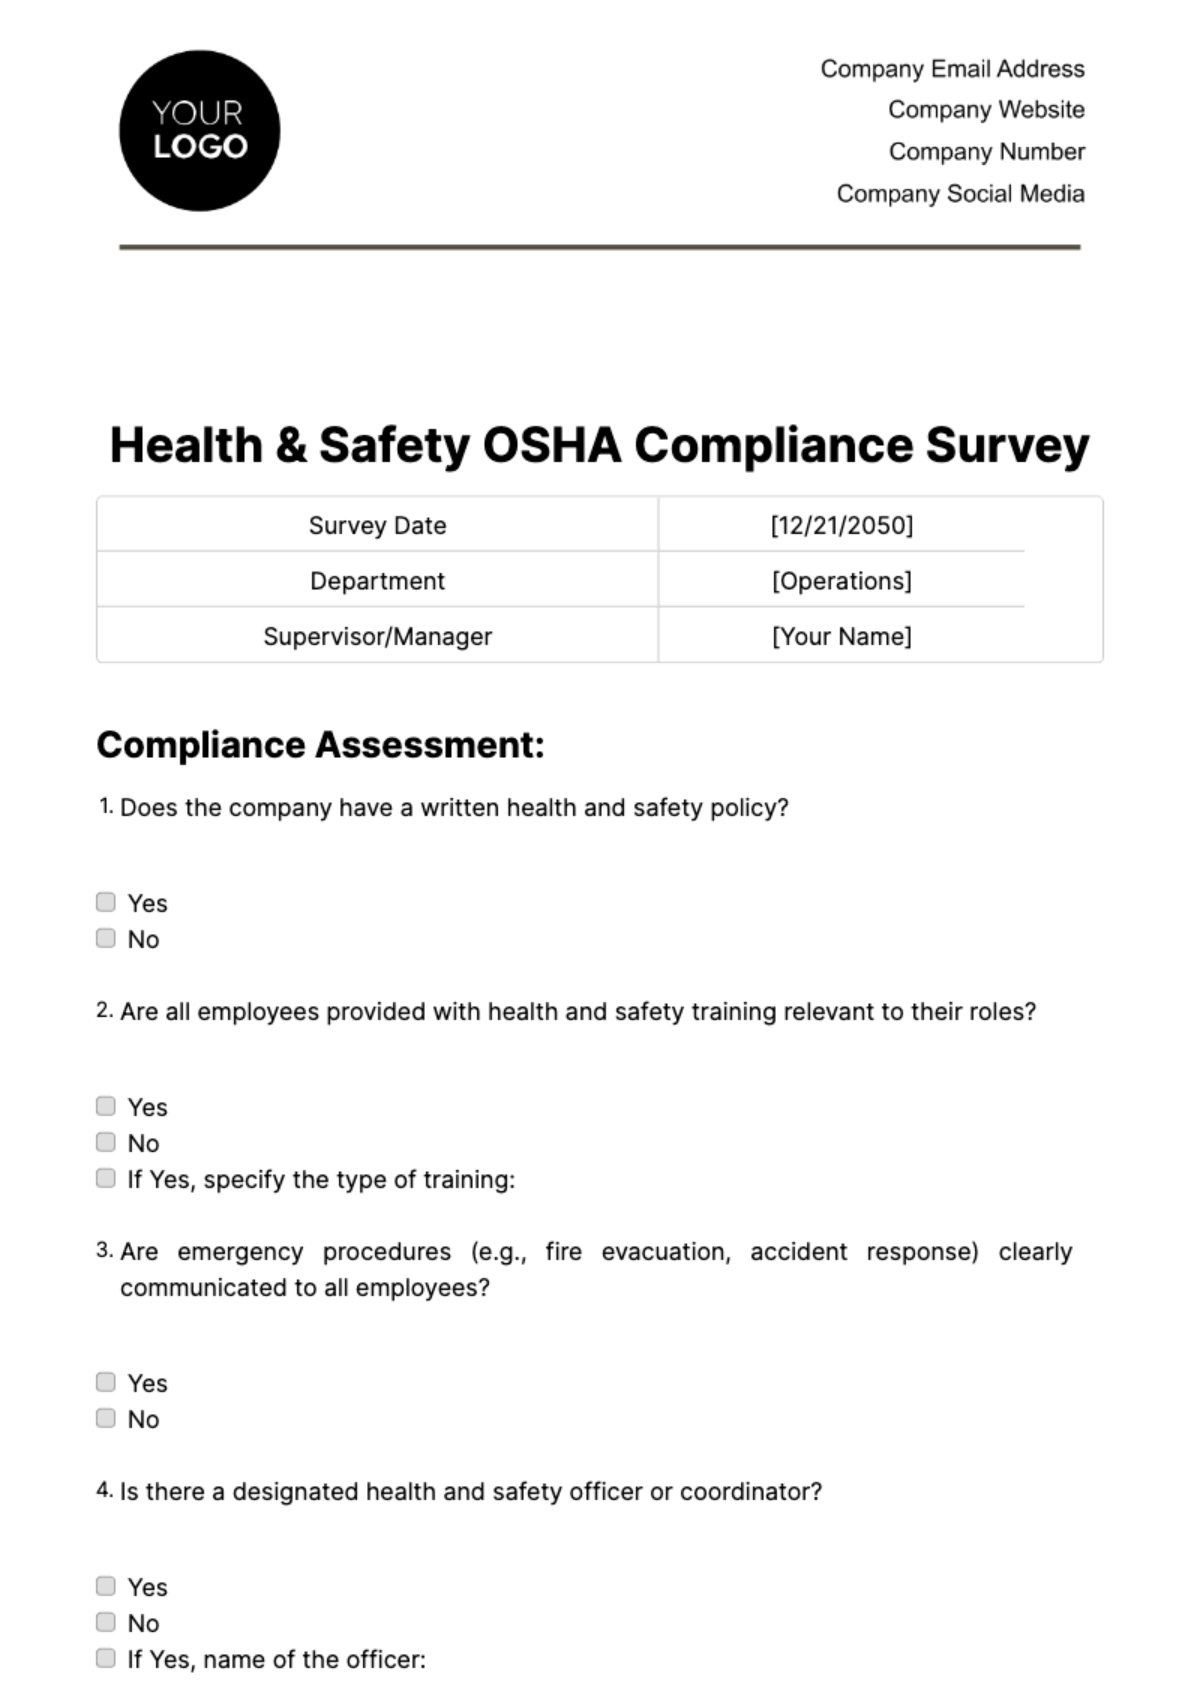 Health & Safety OSHA Compliance Survey Template